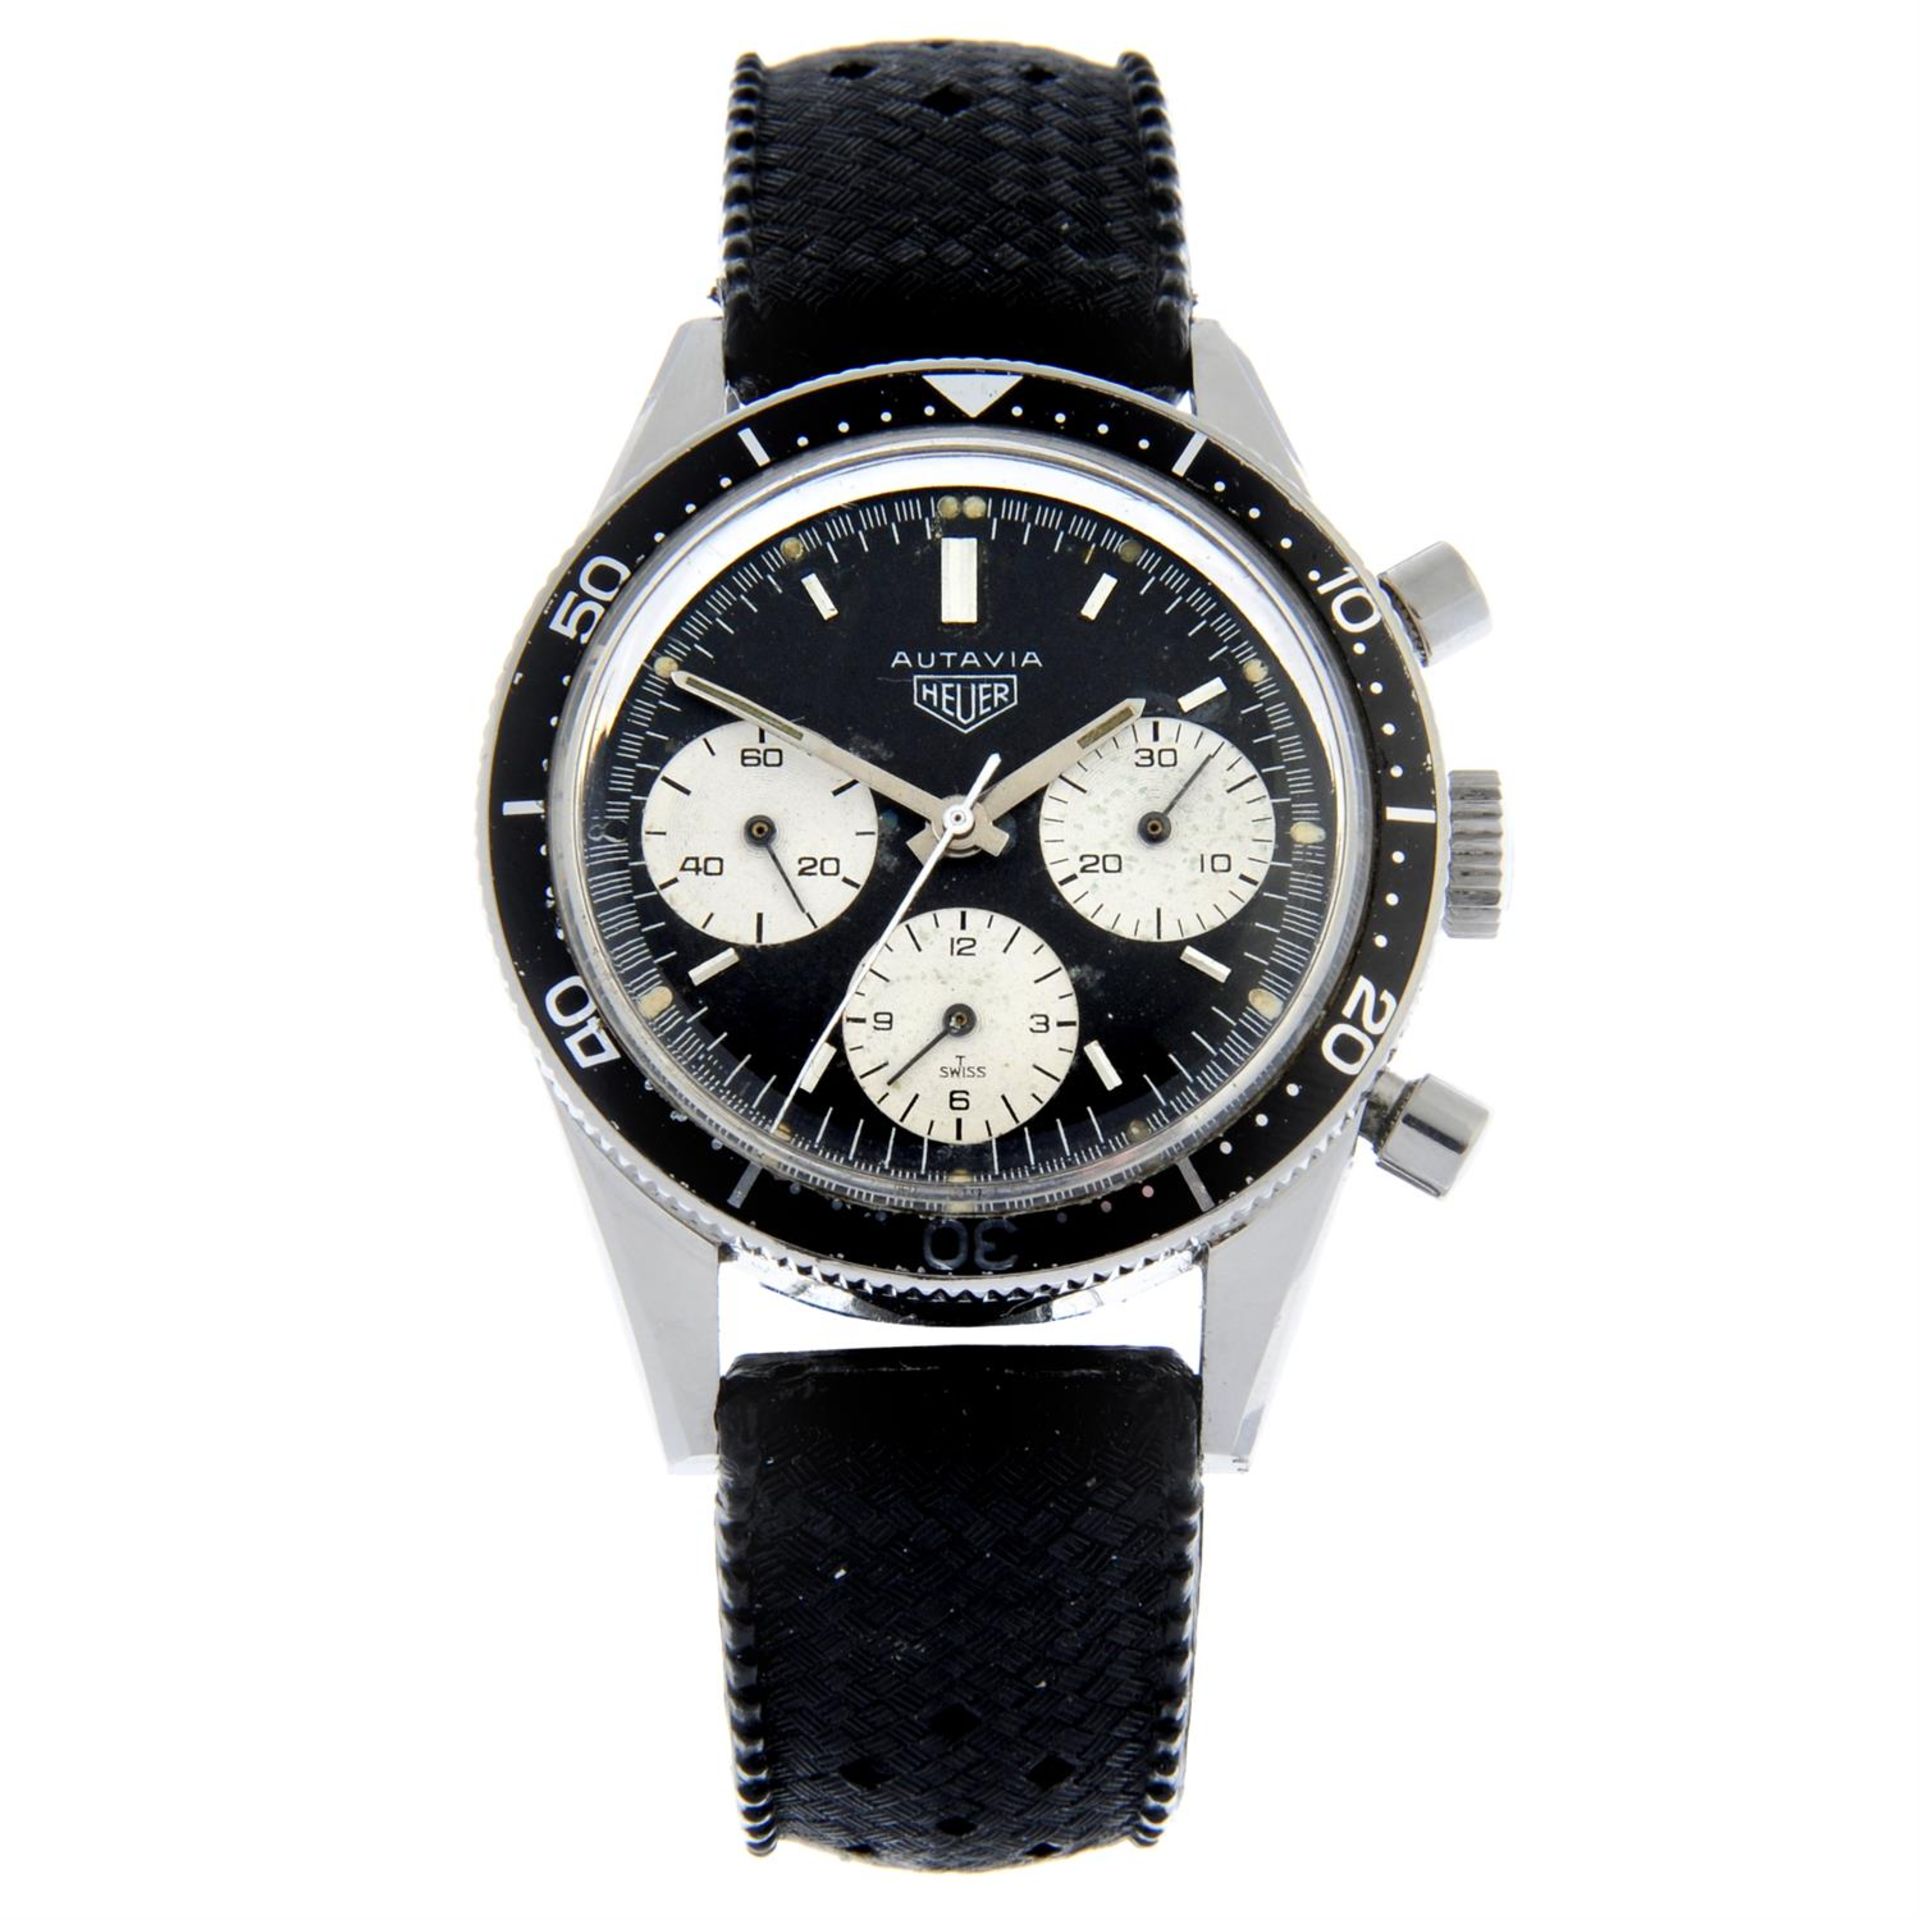 HEUER - a stainless steel Autavia chronograph wrist watch, 38mm.